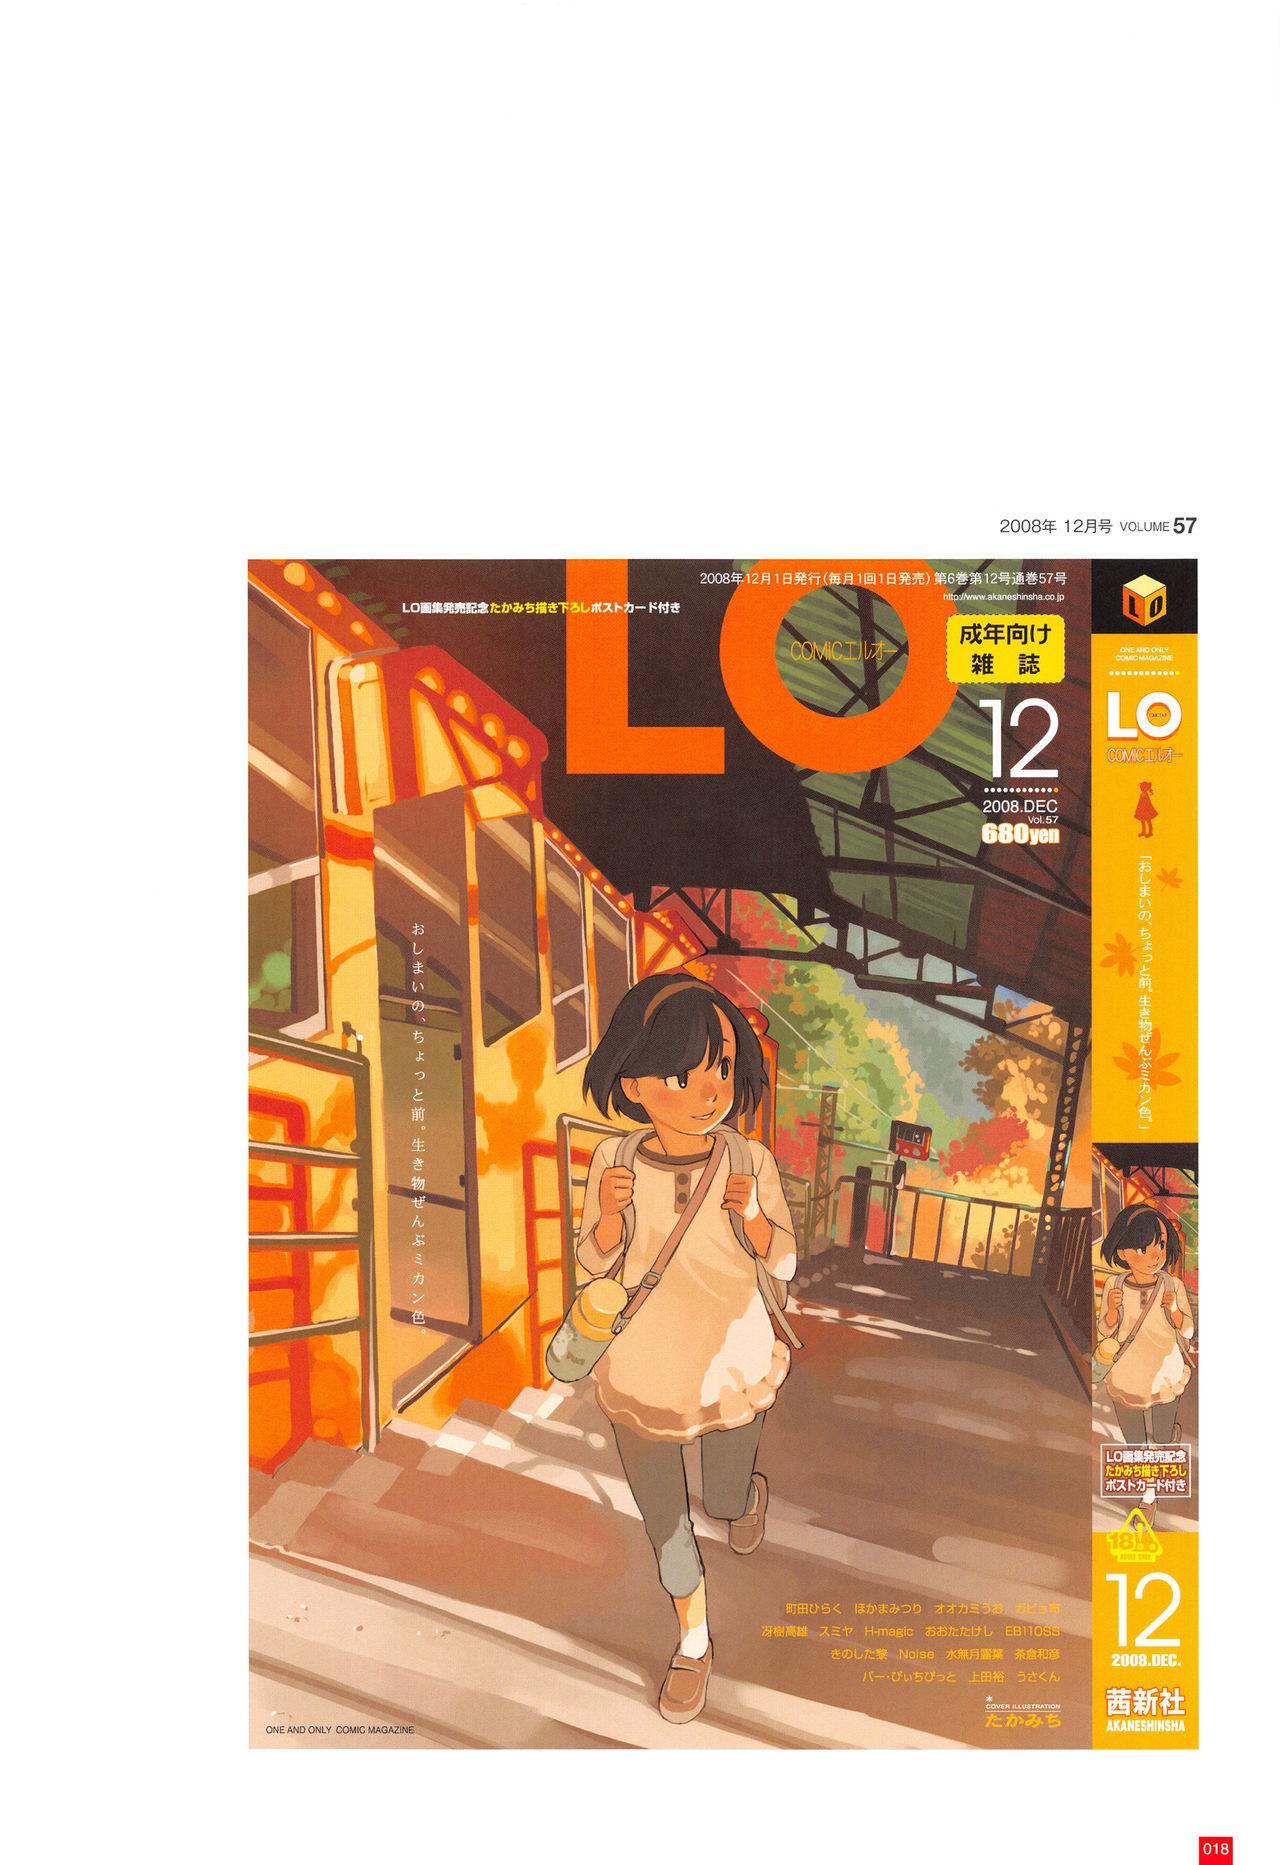 LO Artbook 2-A TAKAMICHI LOOP WORKS 20